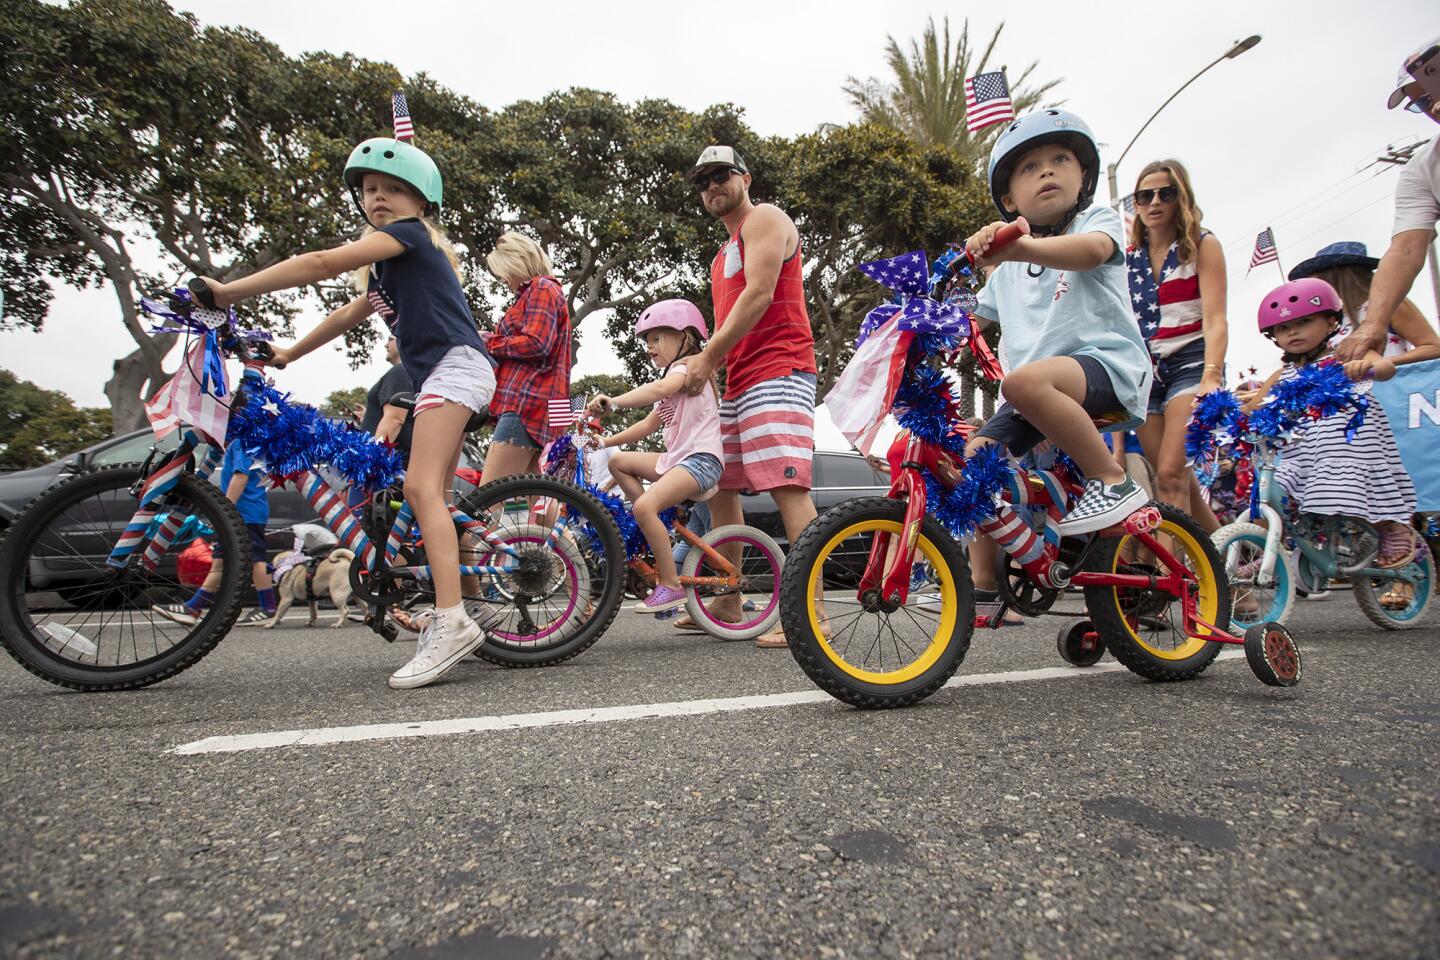 Photo Gallery: The annual Newport Peninsula Bike Parade and Community Festival